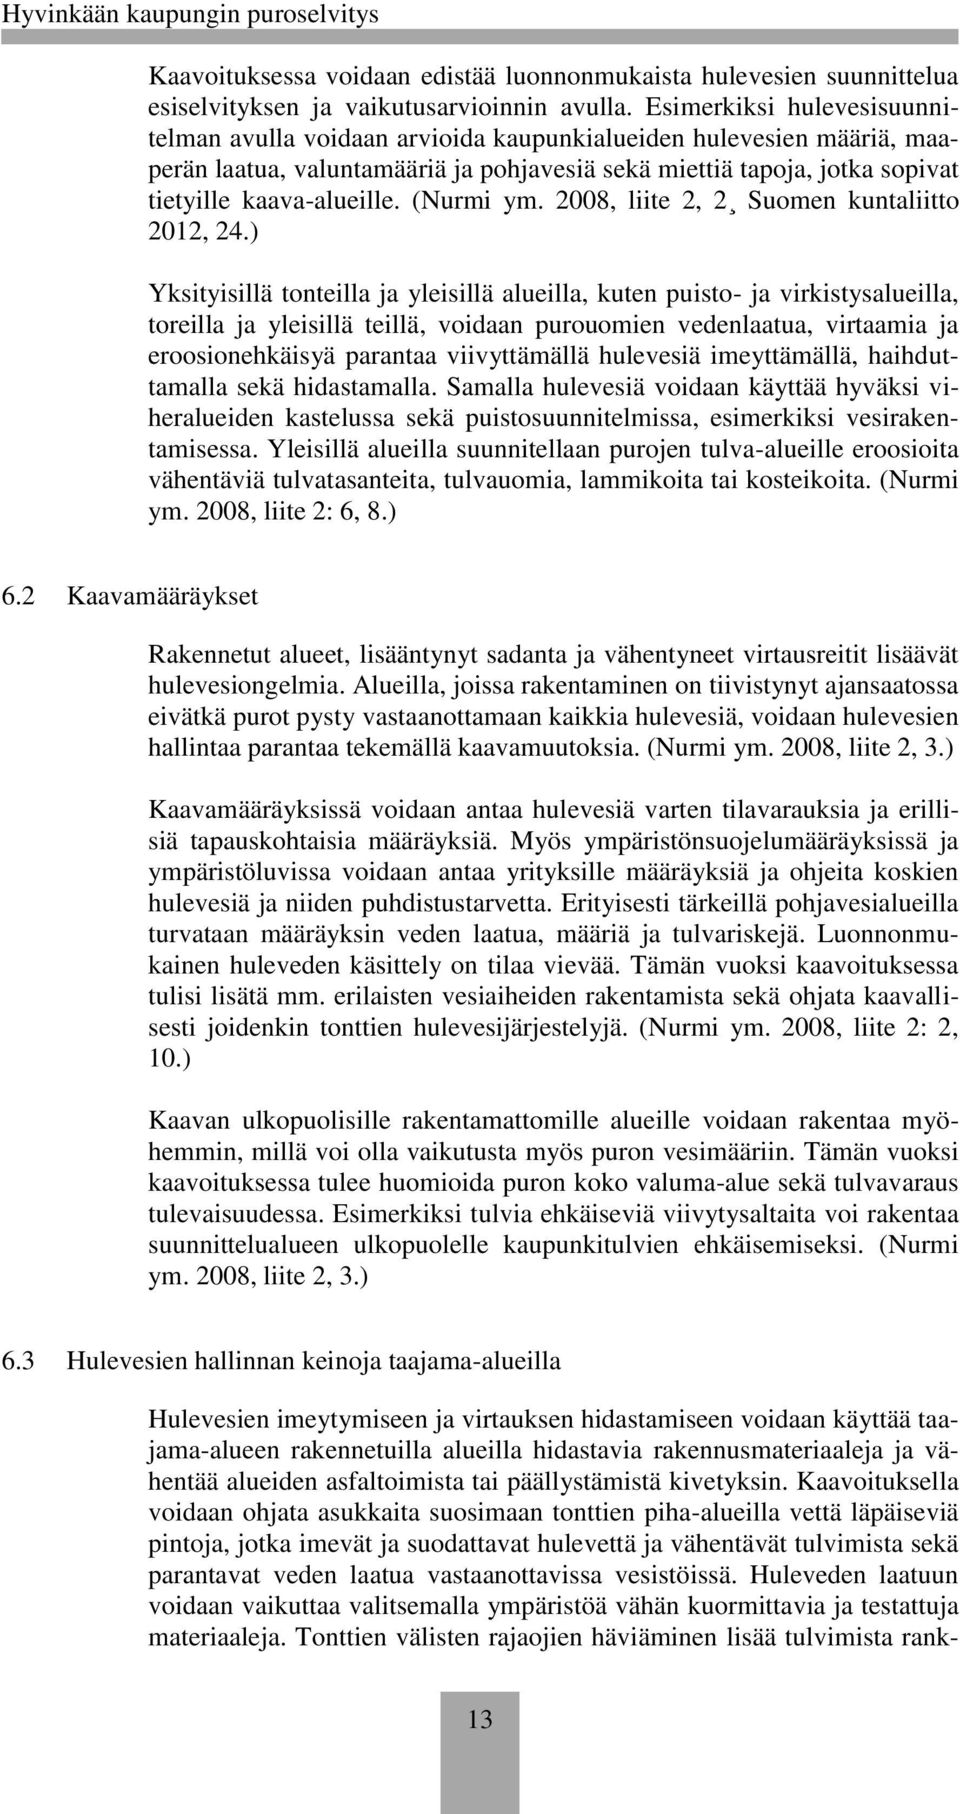 (Nurmi ym. 2008, liite 2, 2 Suomen kuntaliitto 2012, 24.